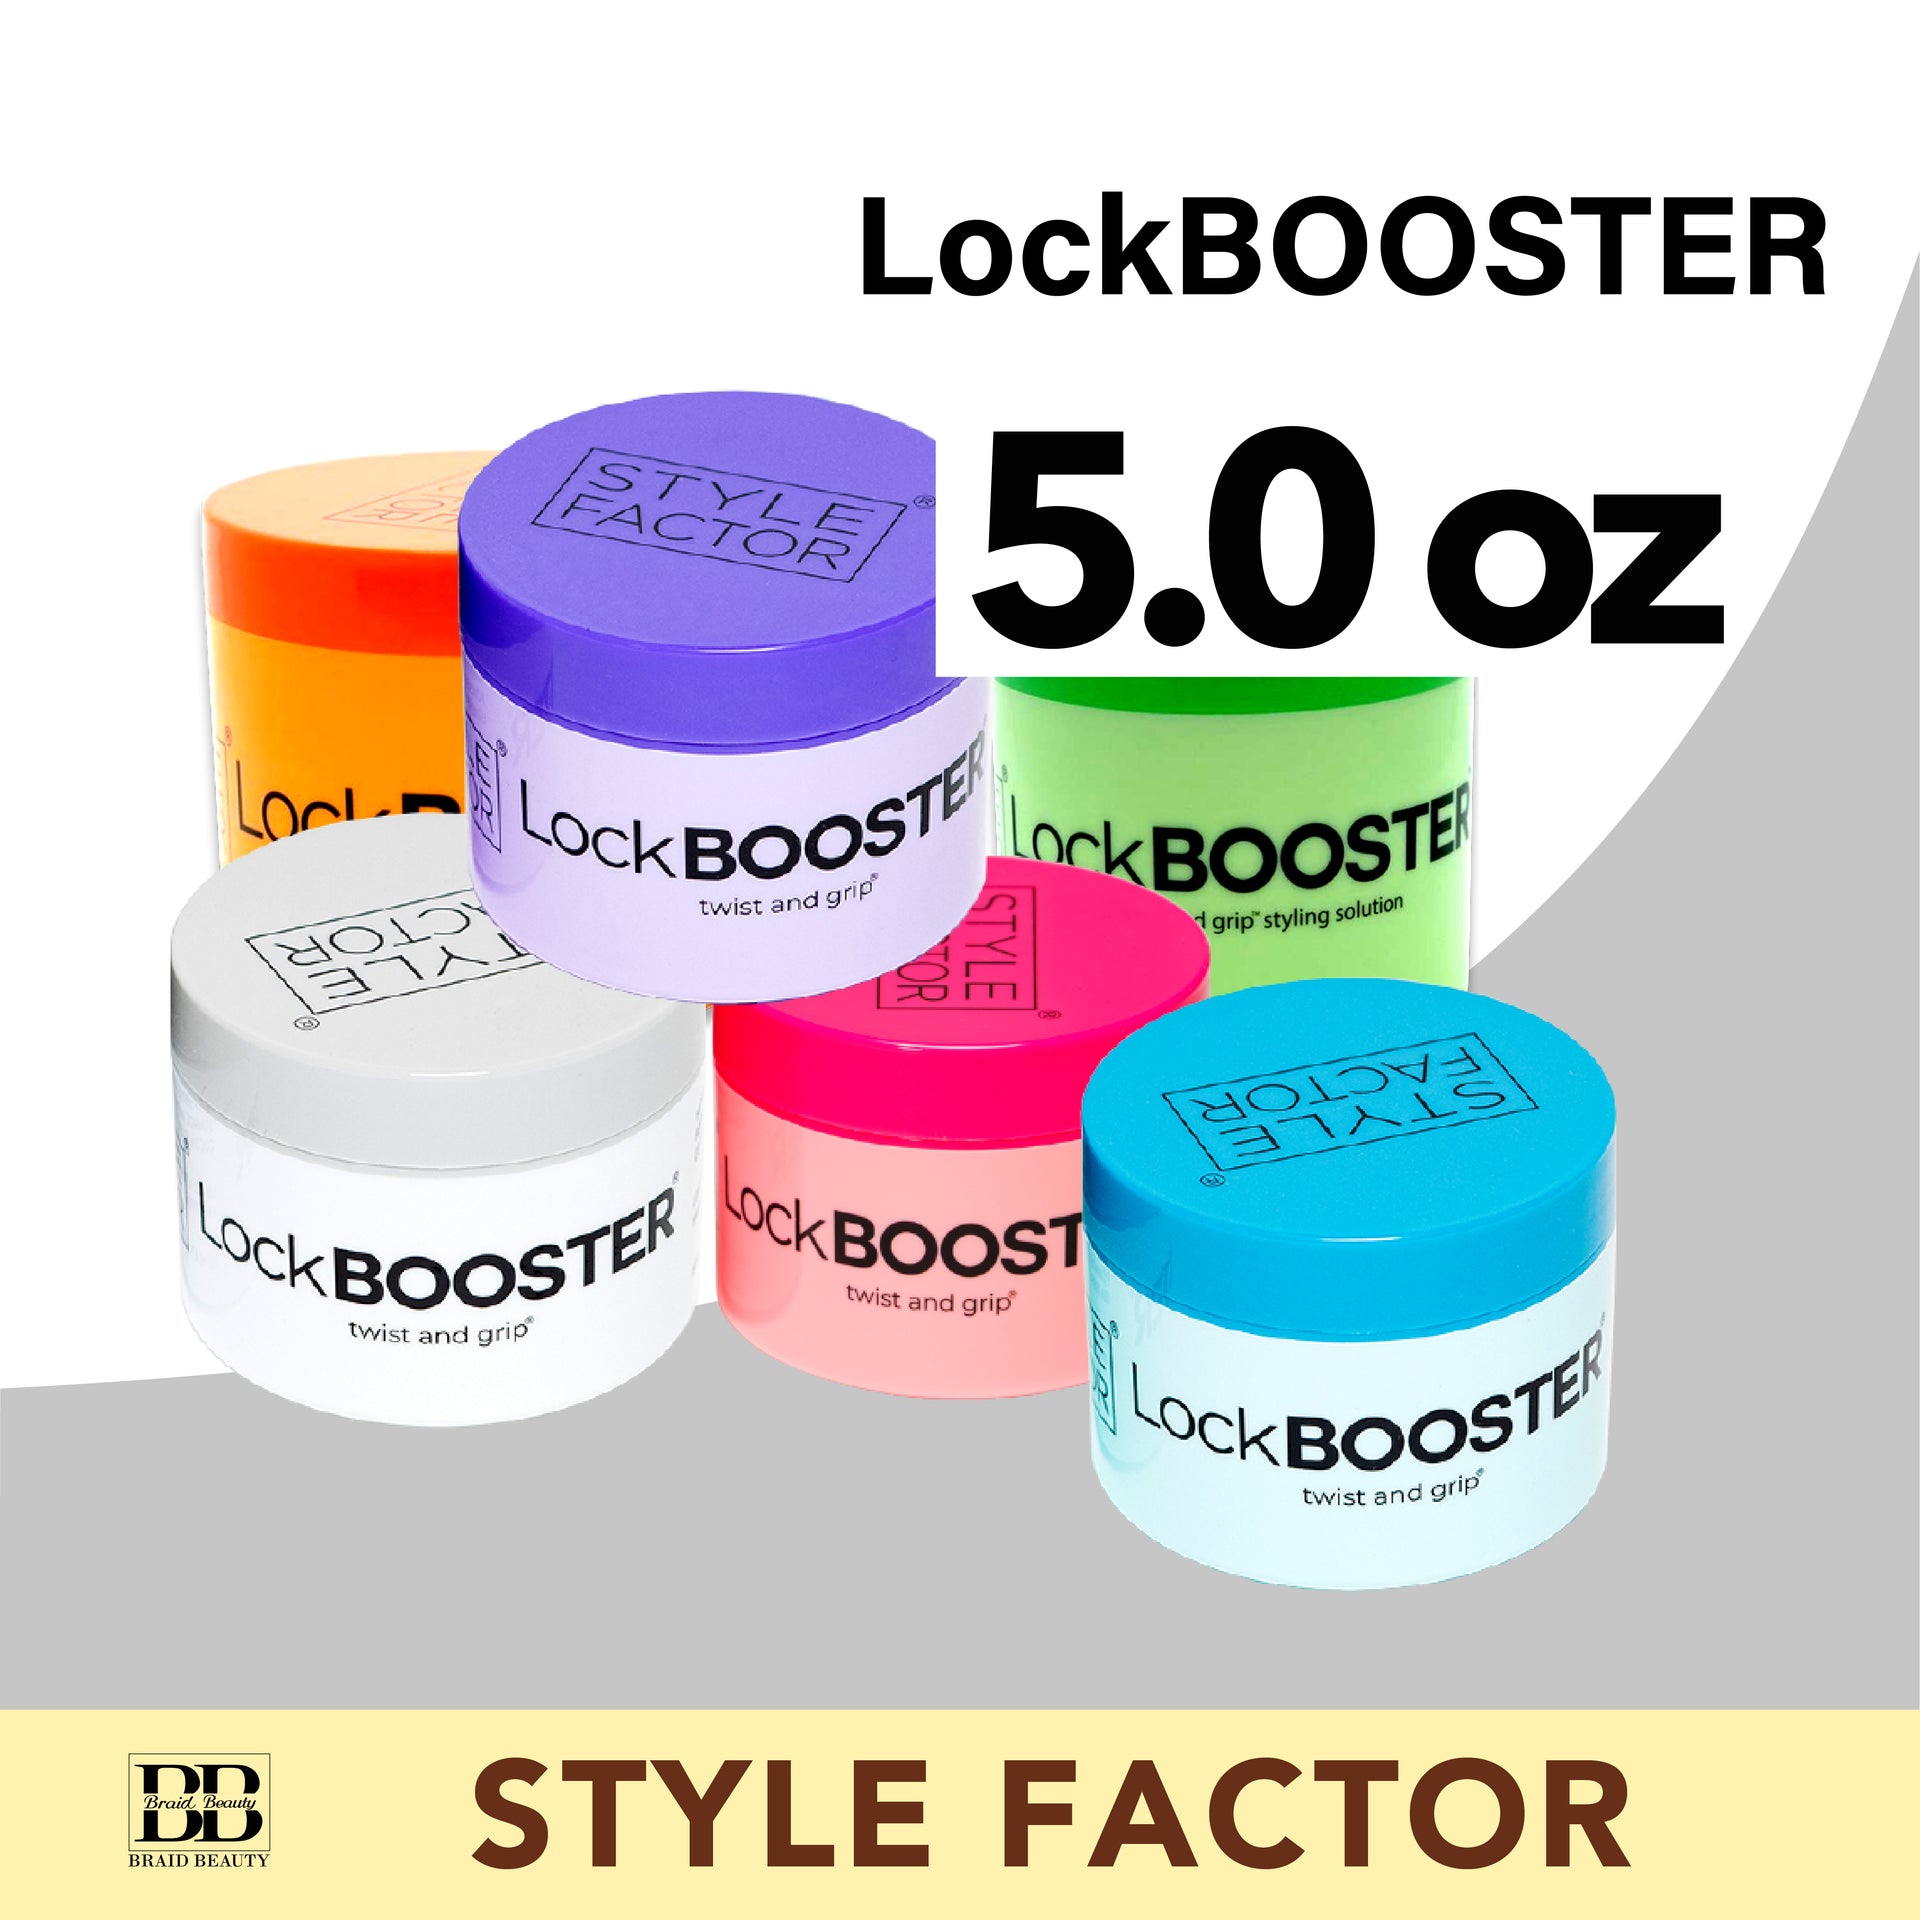 LockBOOSTER 5.0 oz - BRAID BEAUTY